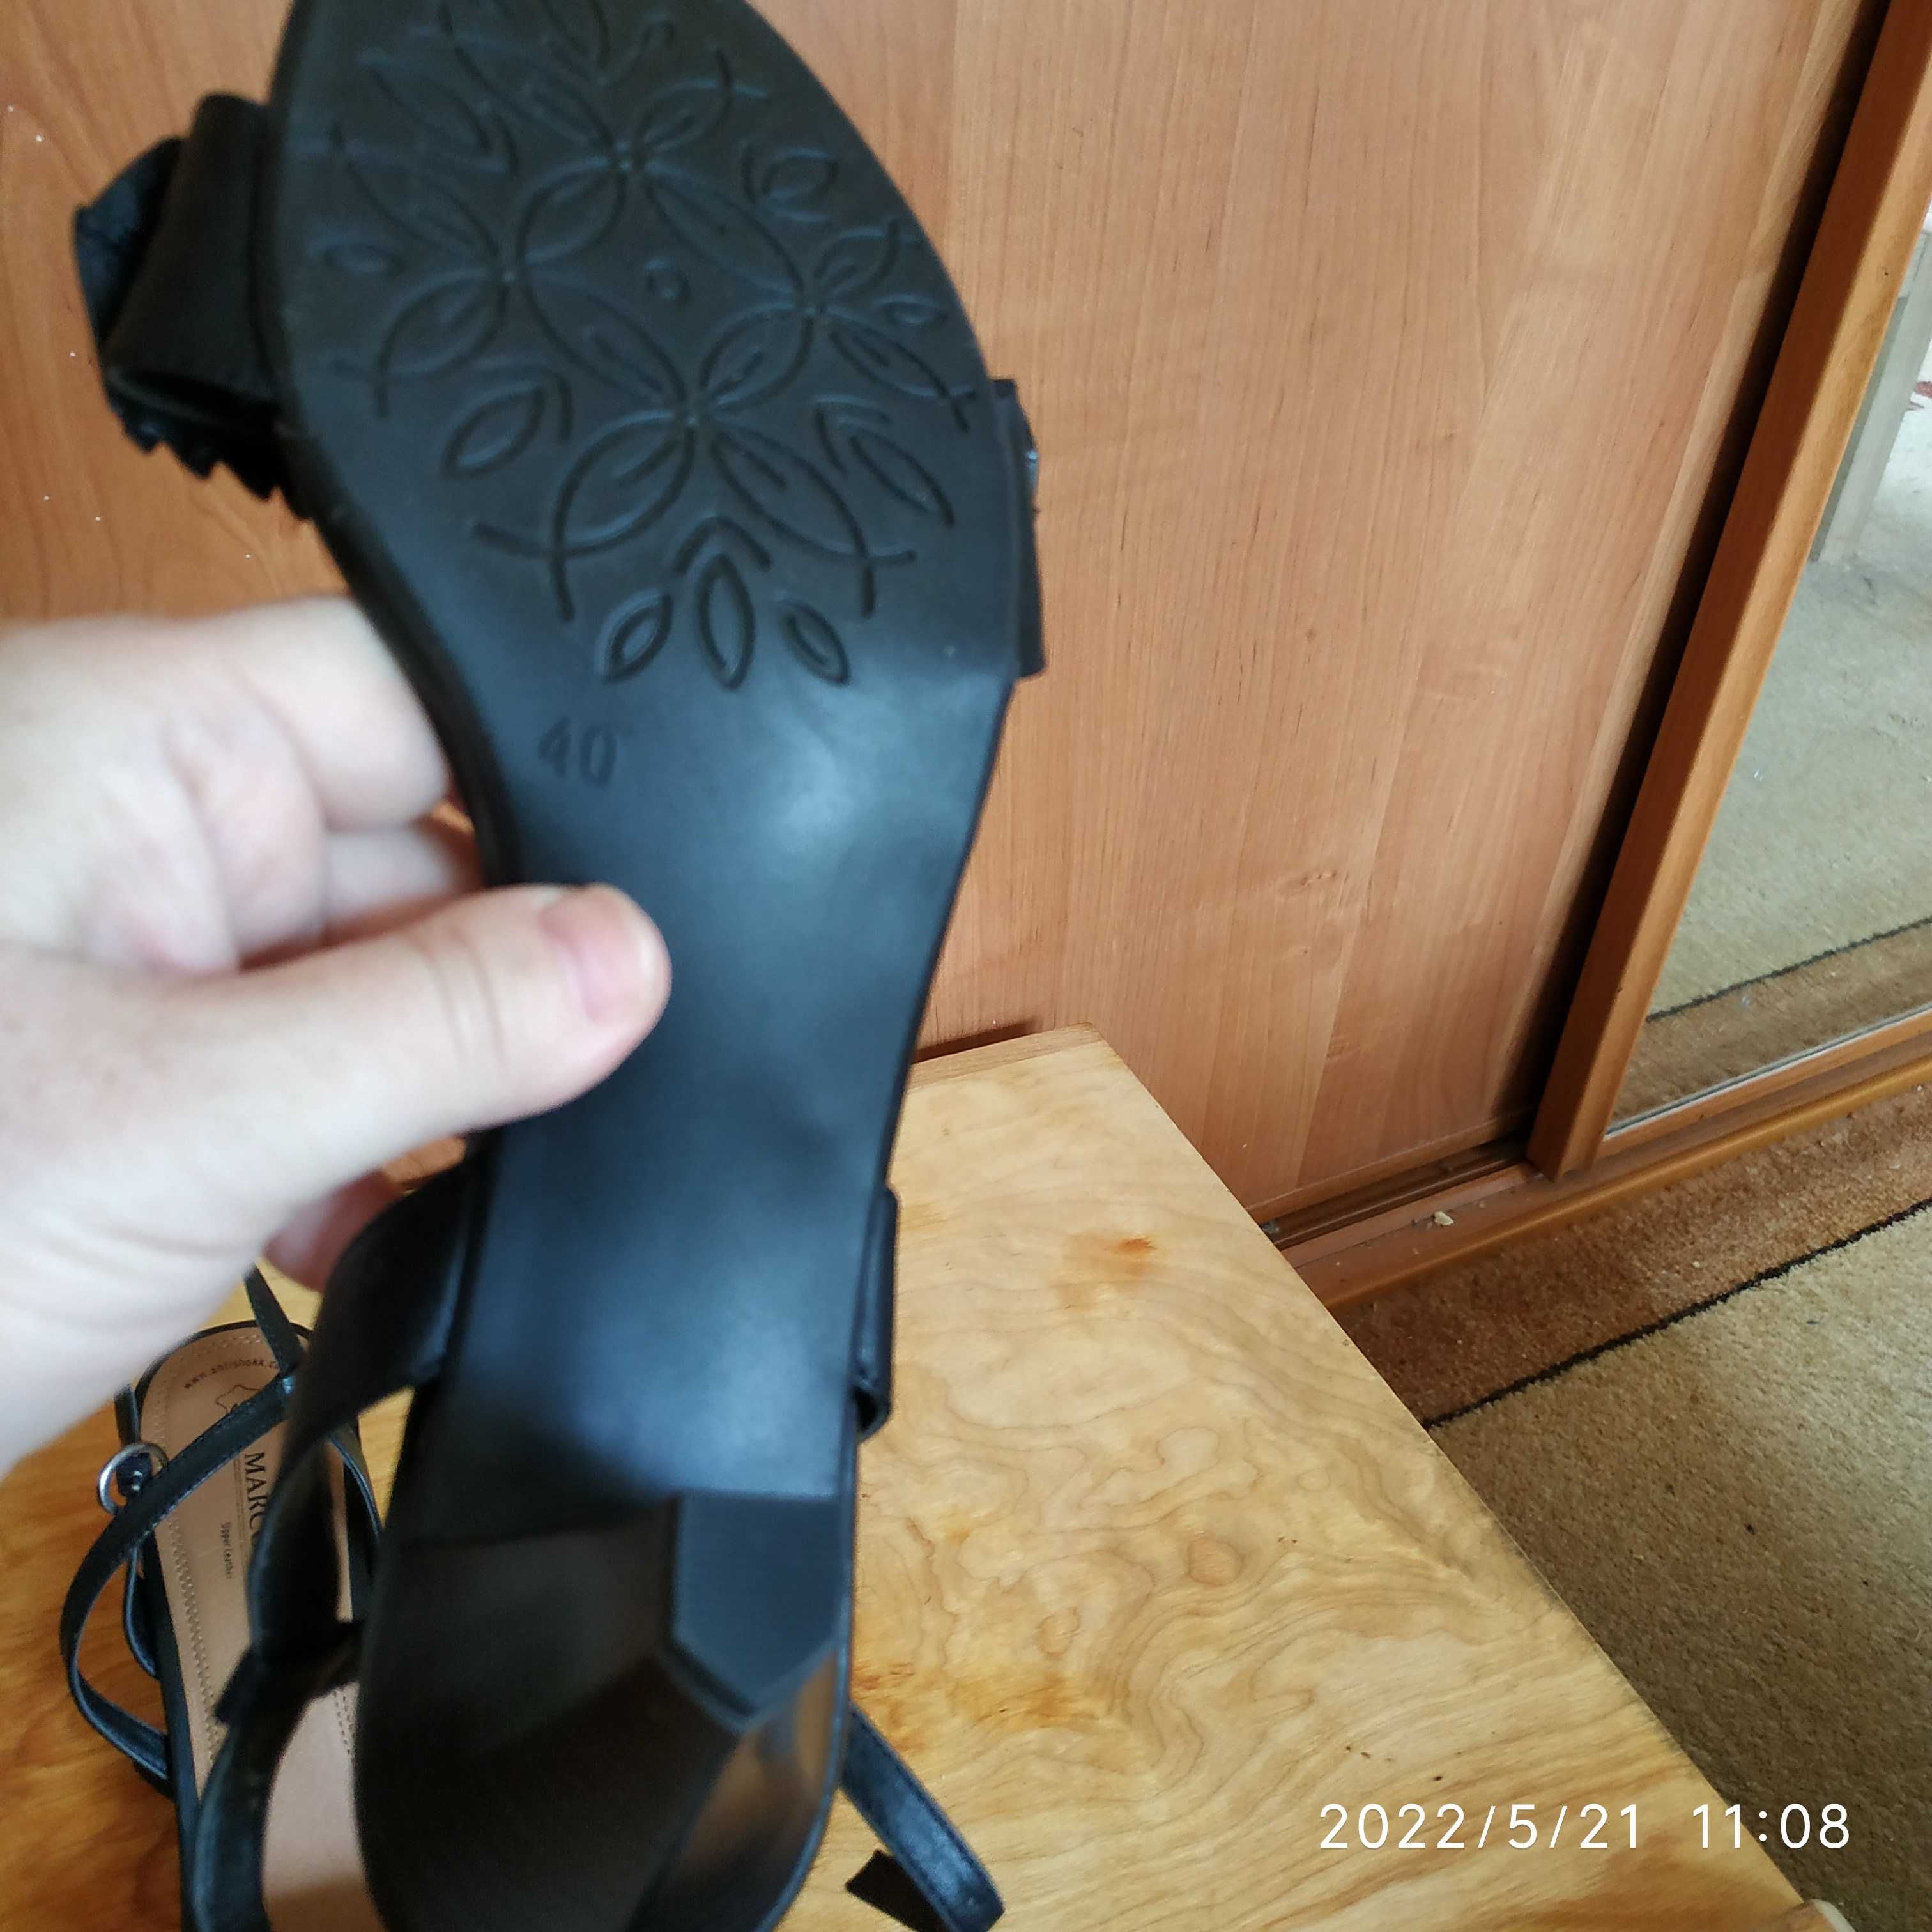 skórzane sandały damskie rozmiar 40 na obcasie